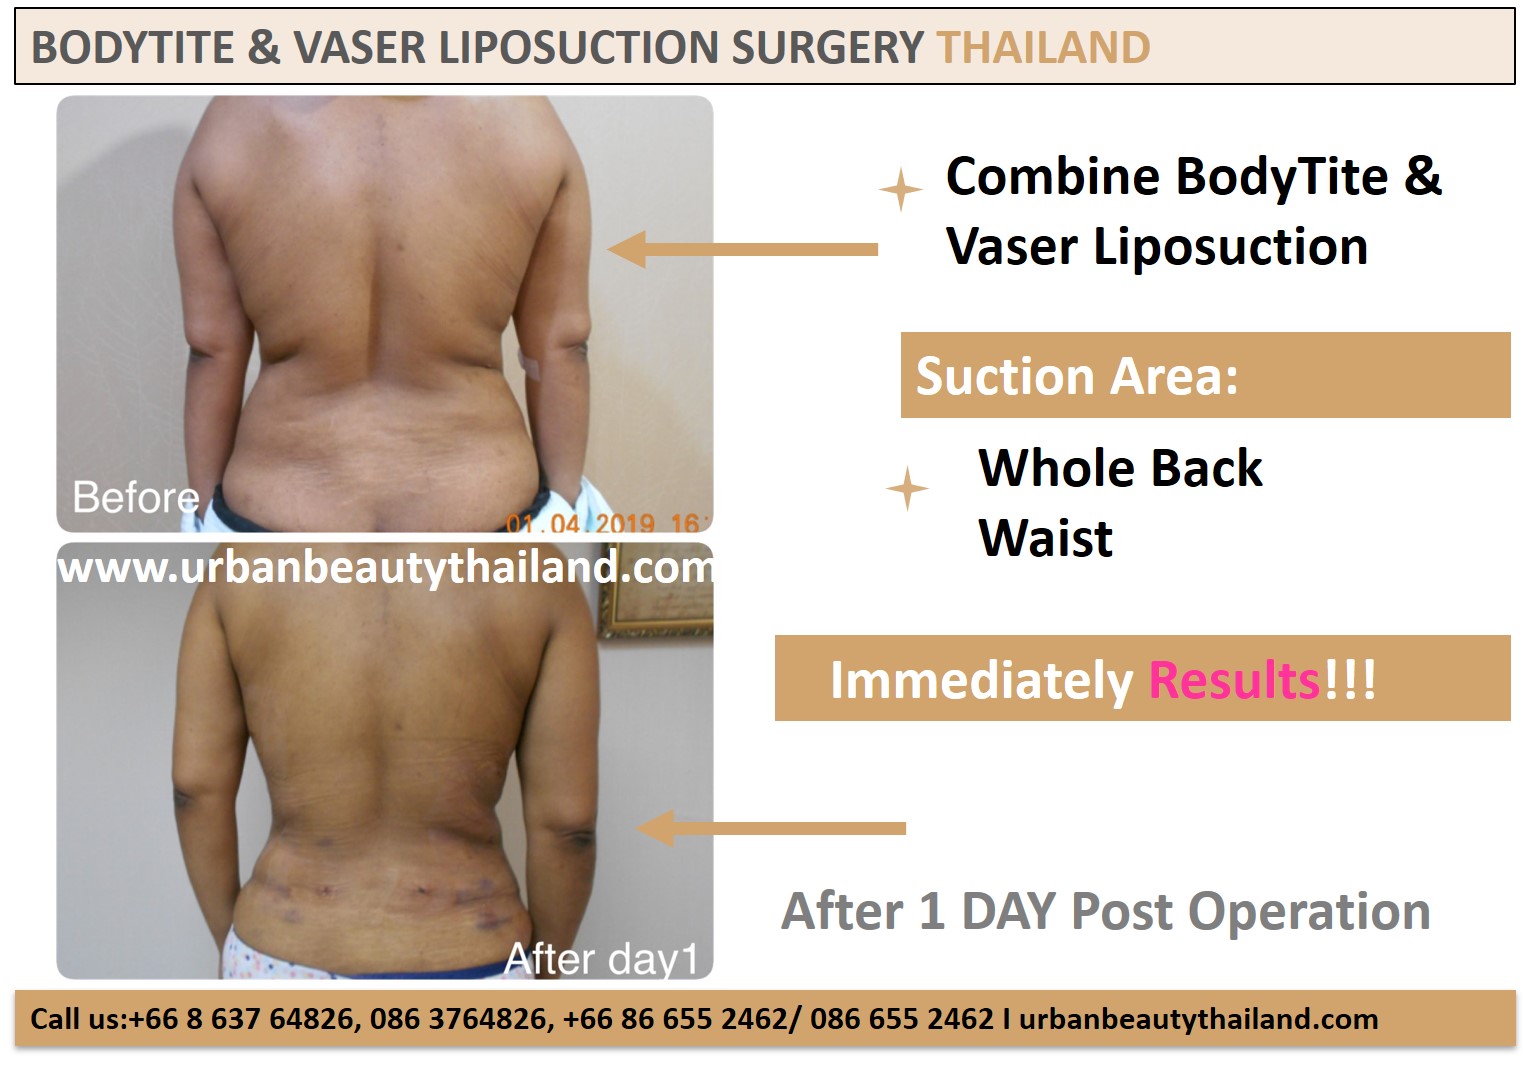 https://urbanbeautythailand.com/wp-content/uploads/2012/12/bodytite-vaser-liposuction-bangkok-thailand.jpg